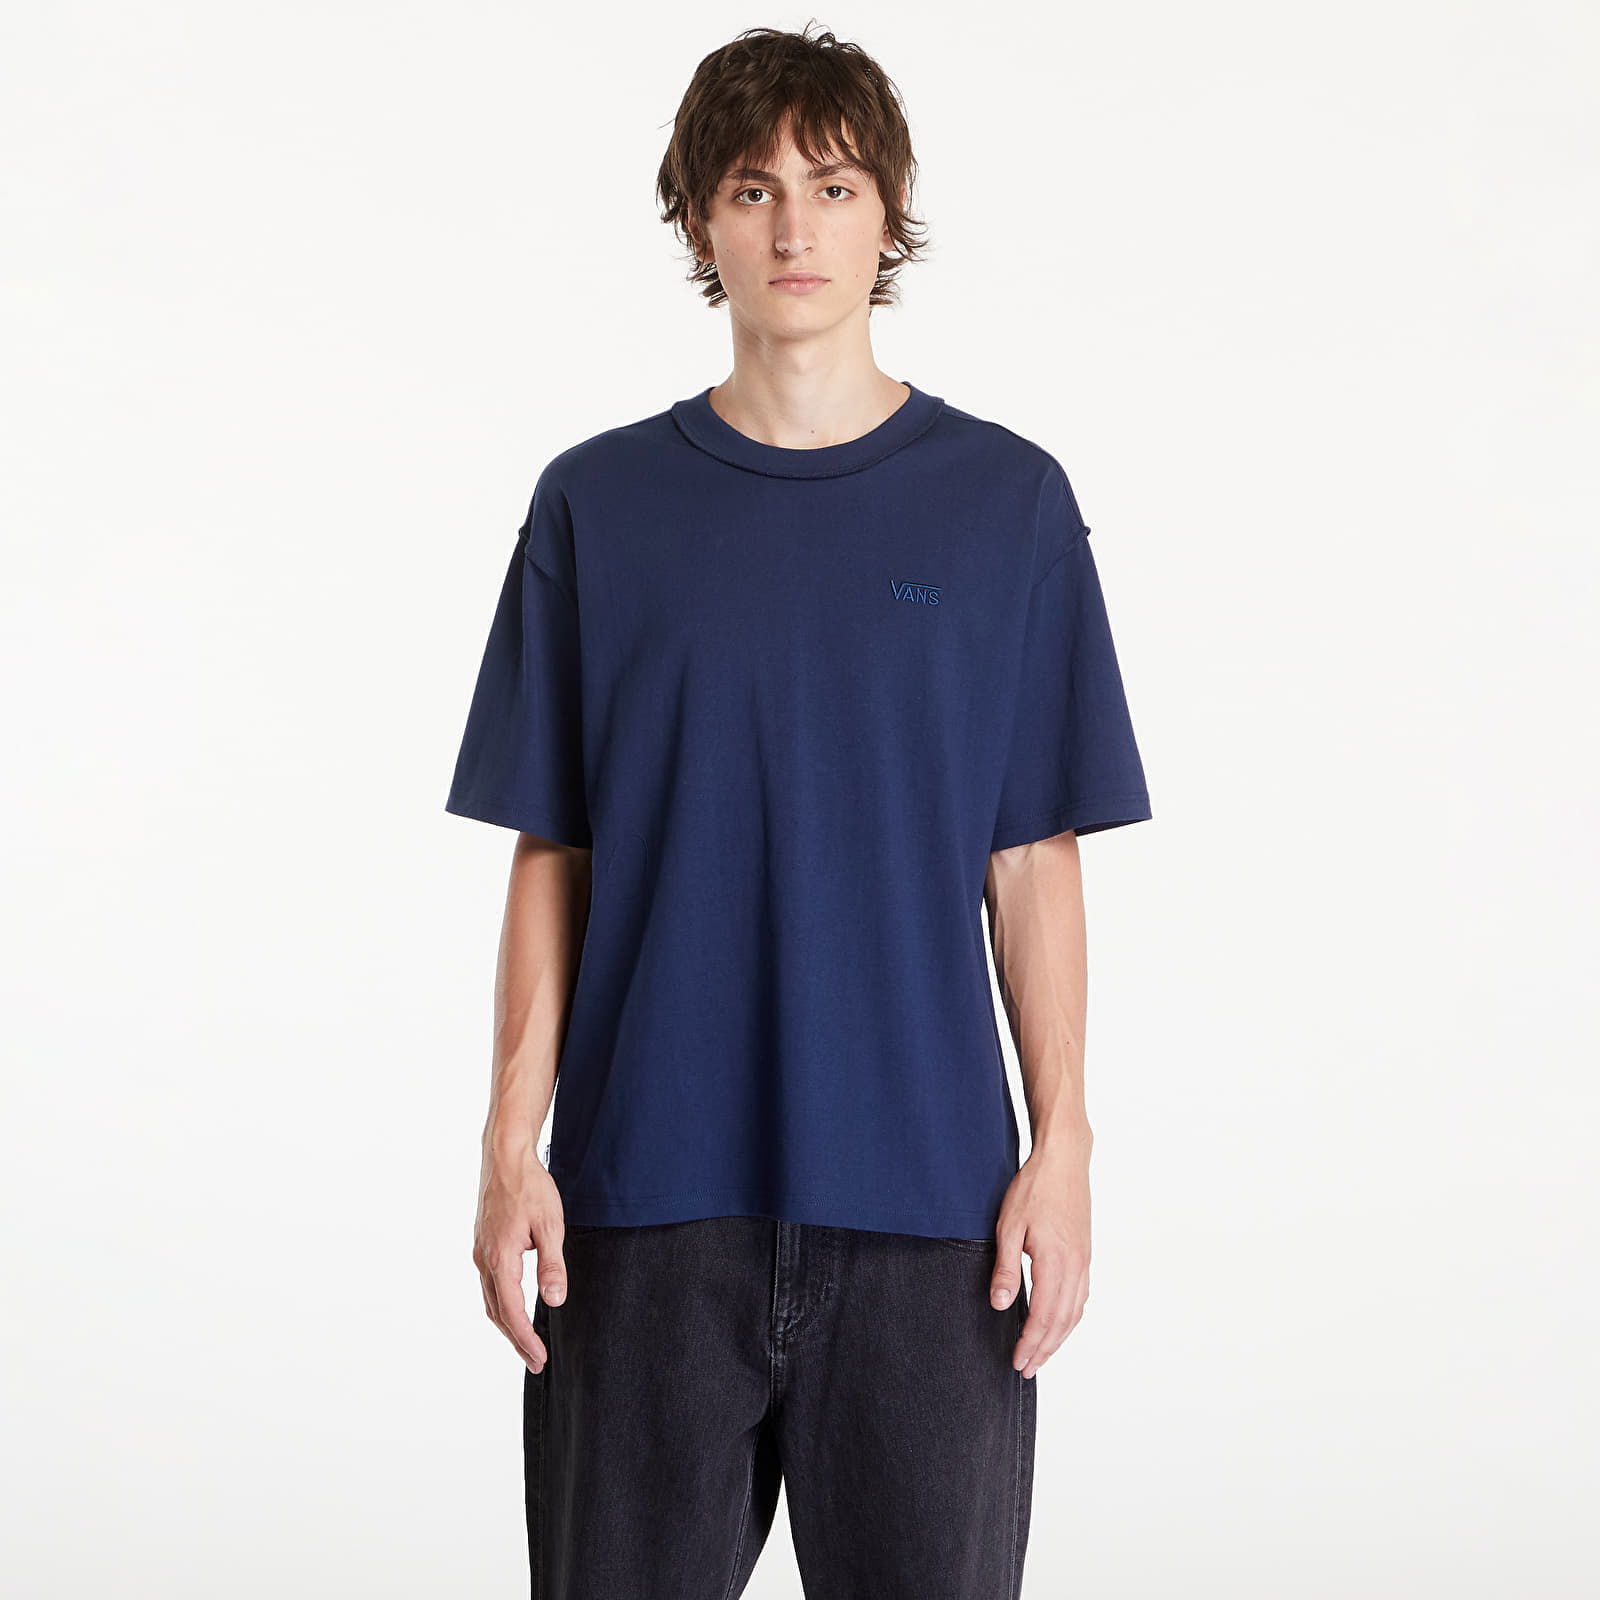 LX Premium Short Sleeve T-Shirt Dress Blues